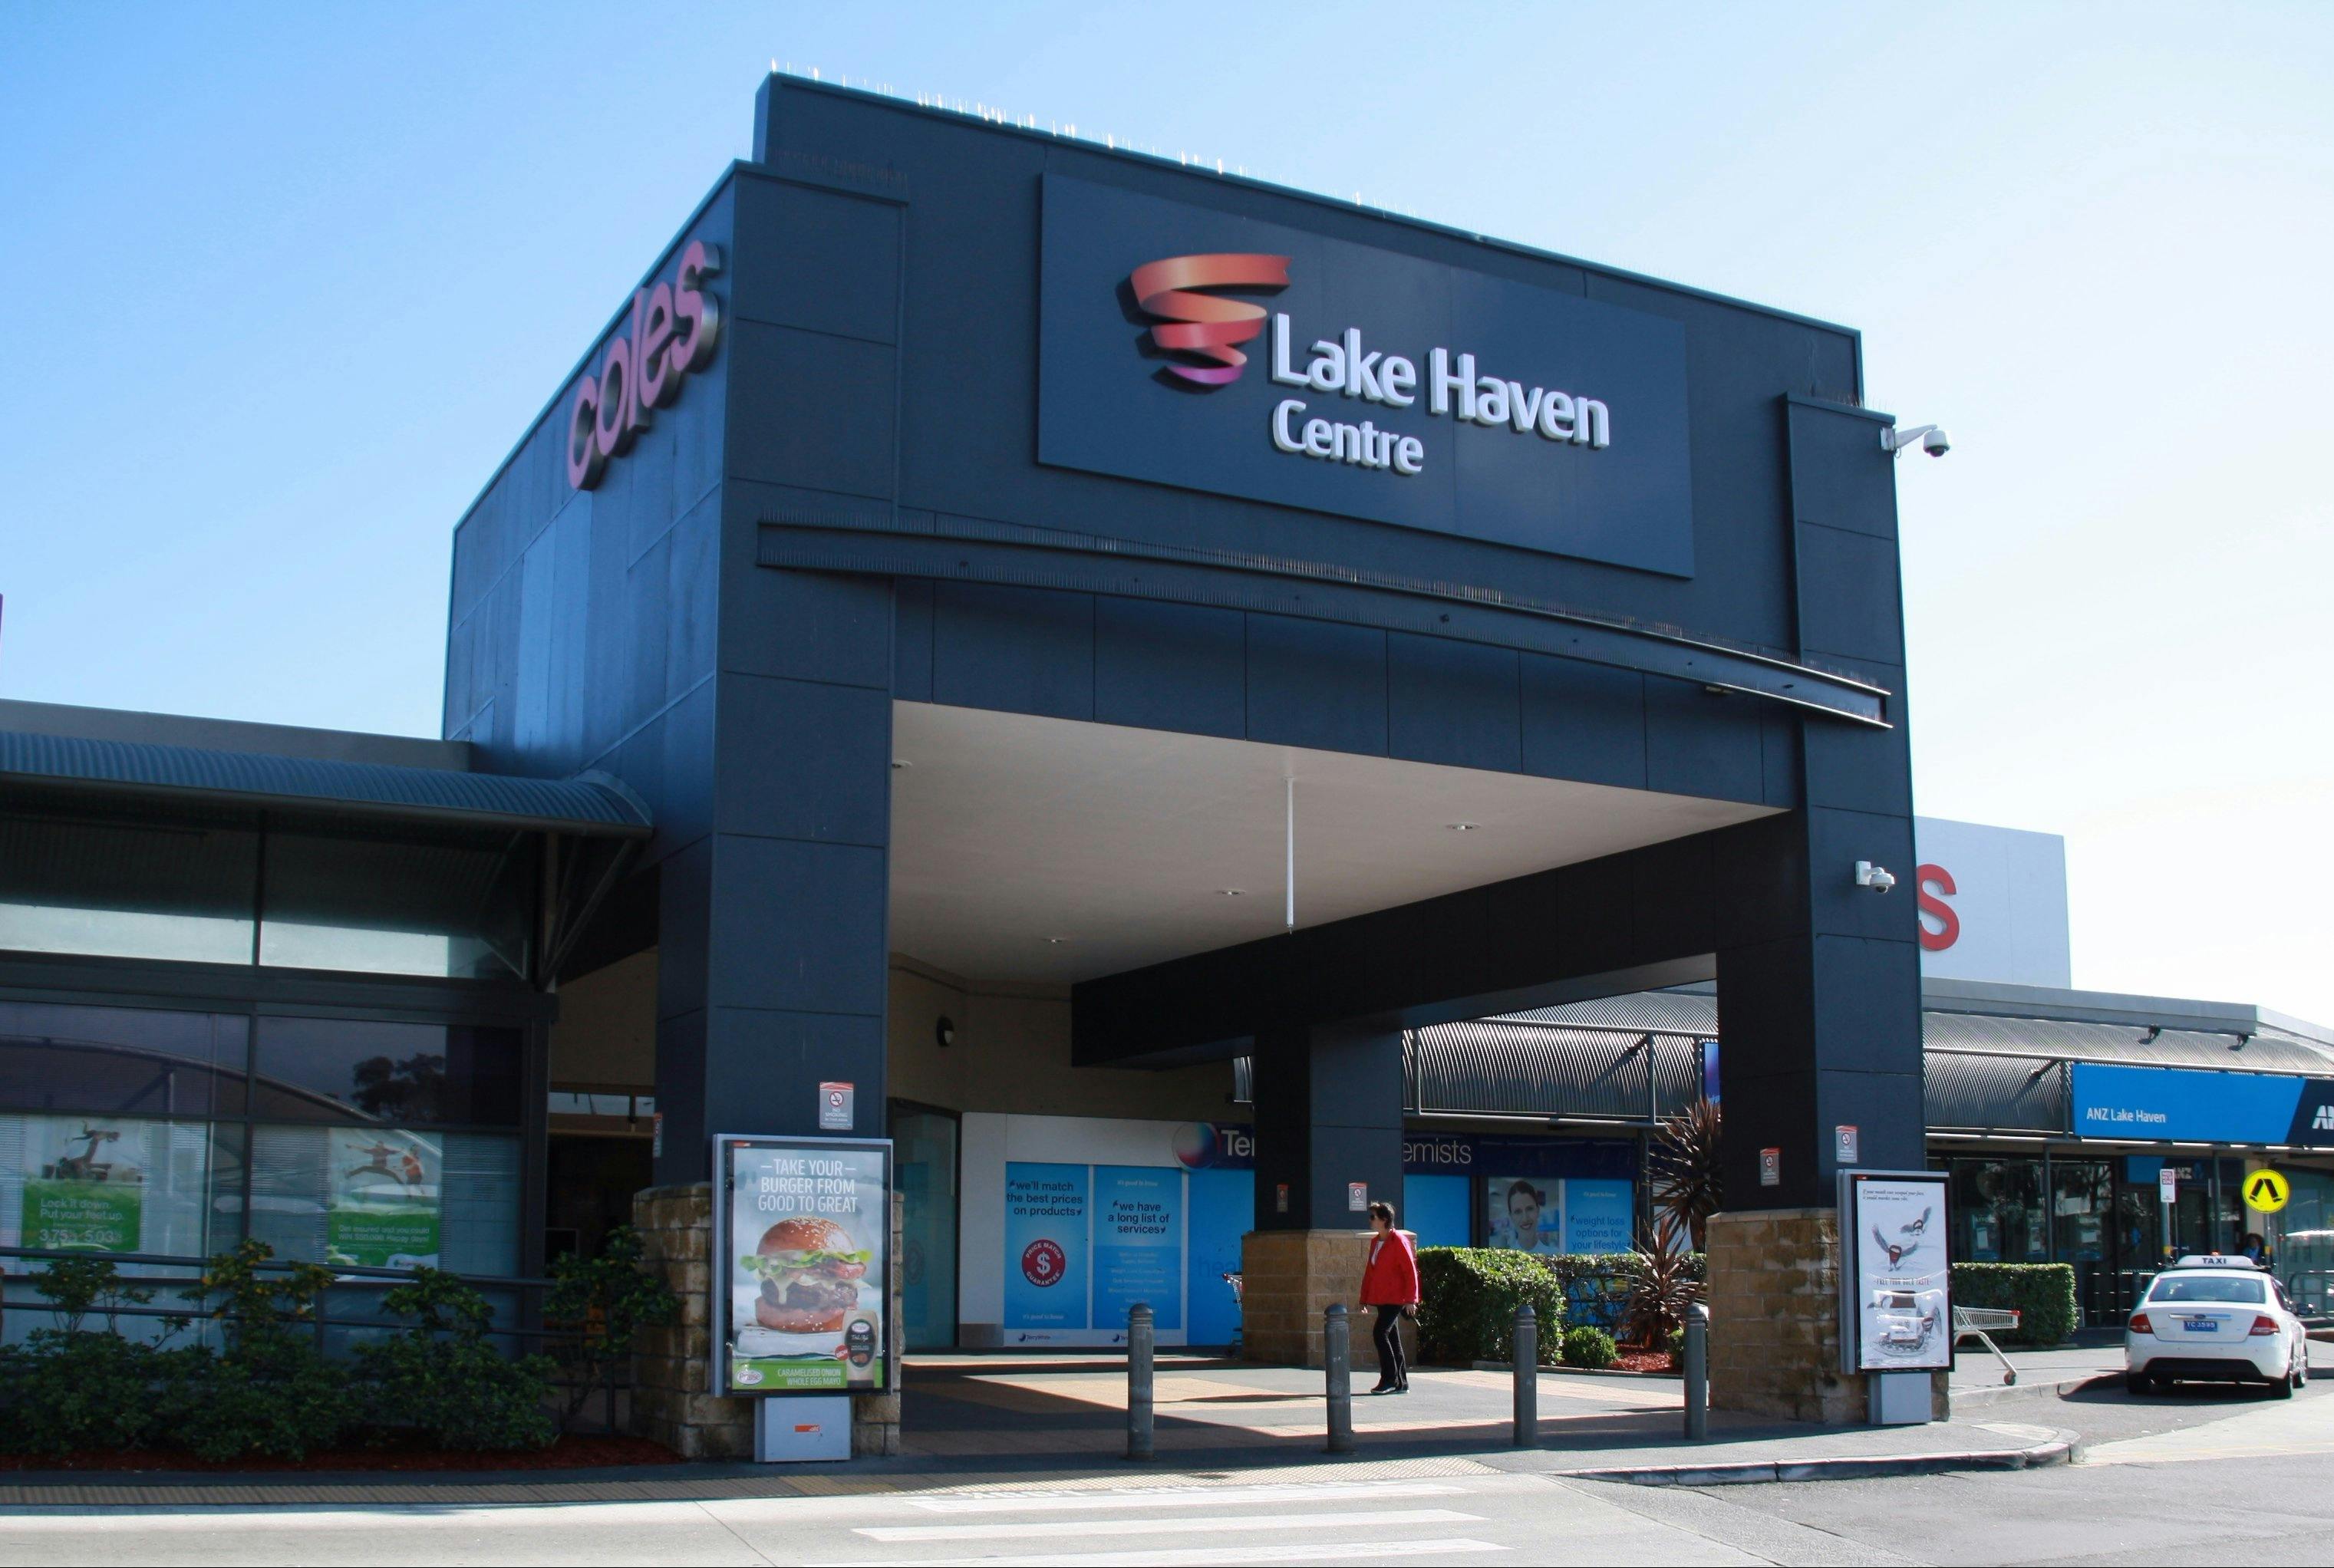 Lake haven shopping centre